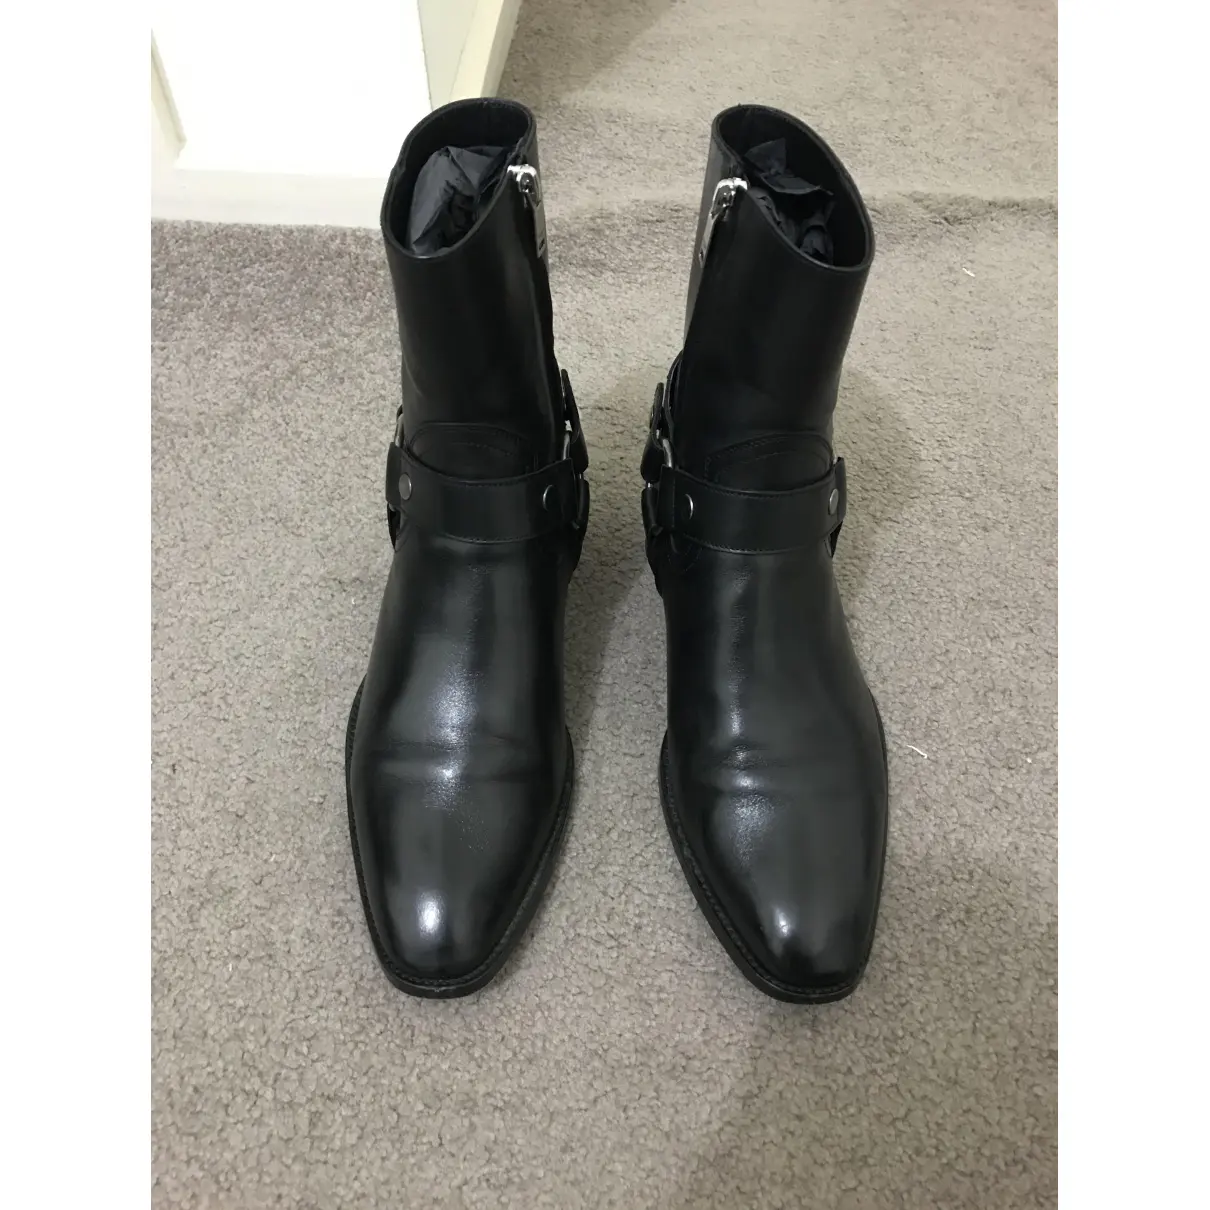 Buy Saint Laurent Wyatt leather boots online